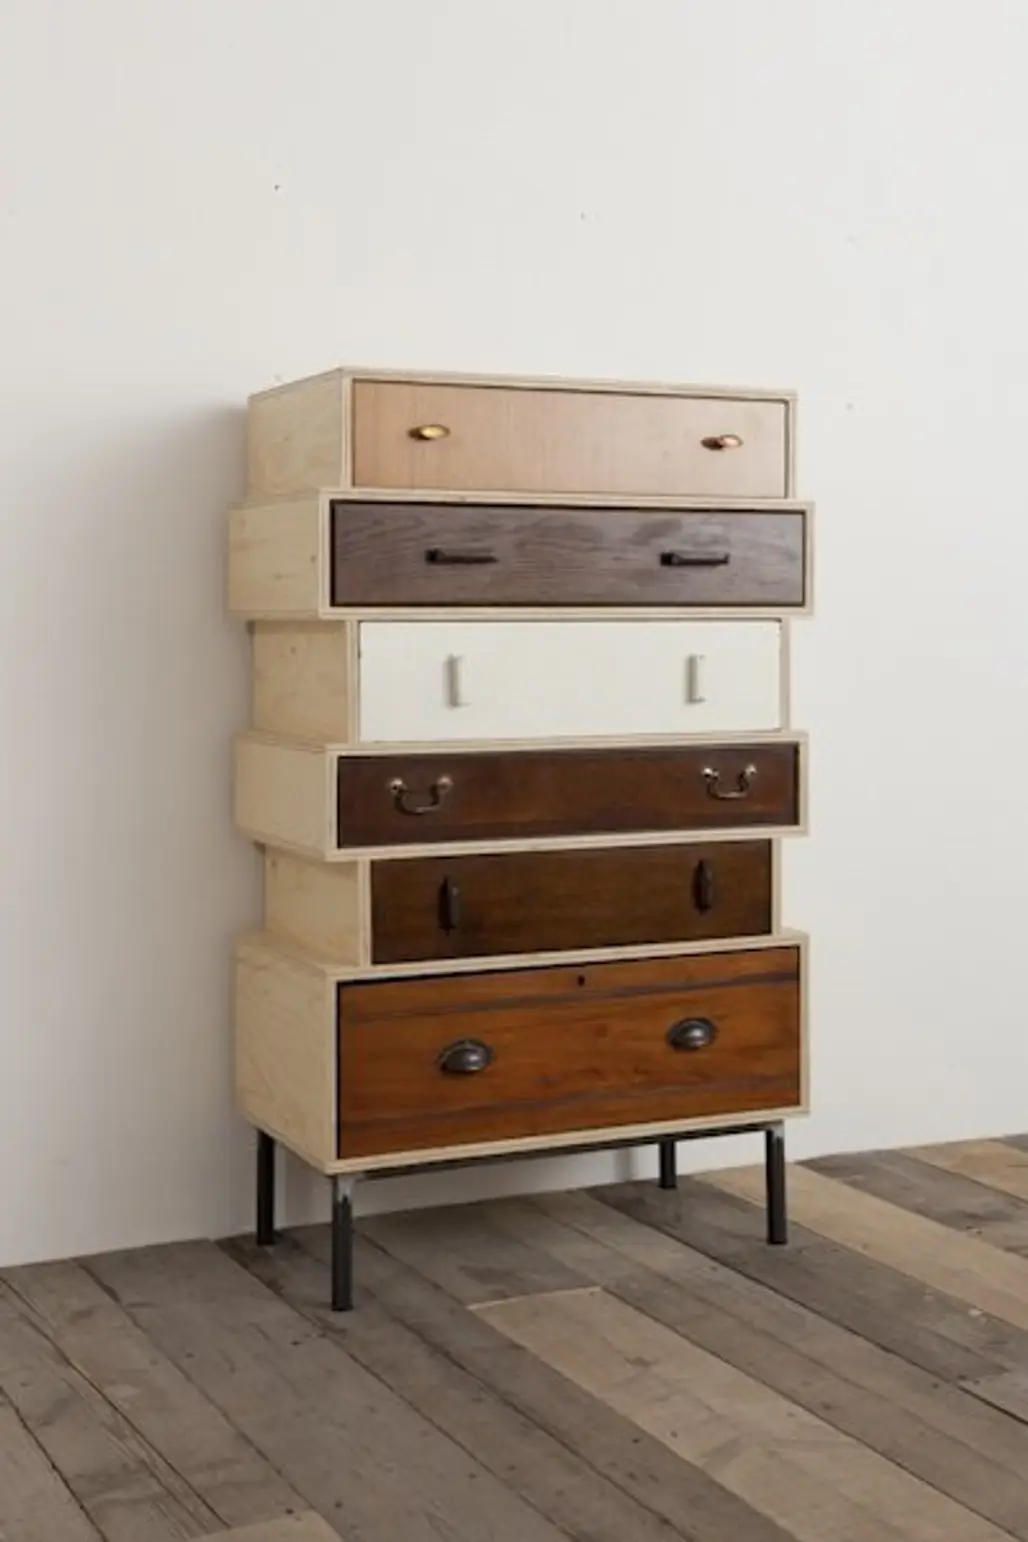 furniture,drawer,chest of drawers,wood,hardwood,